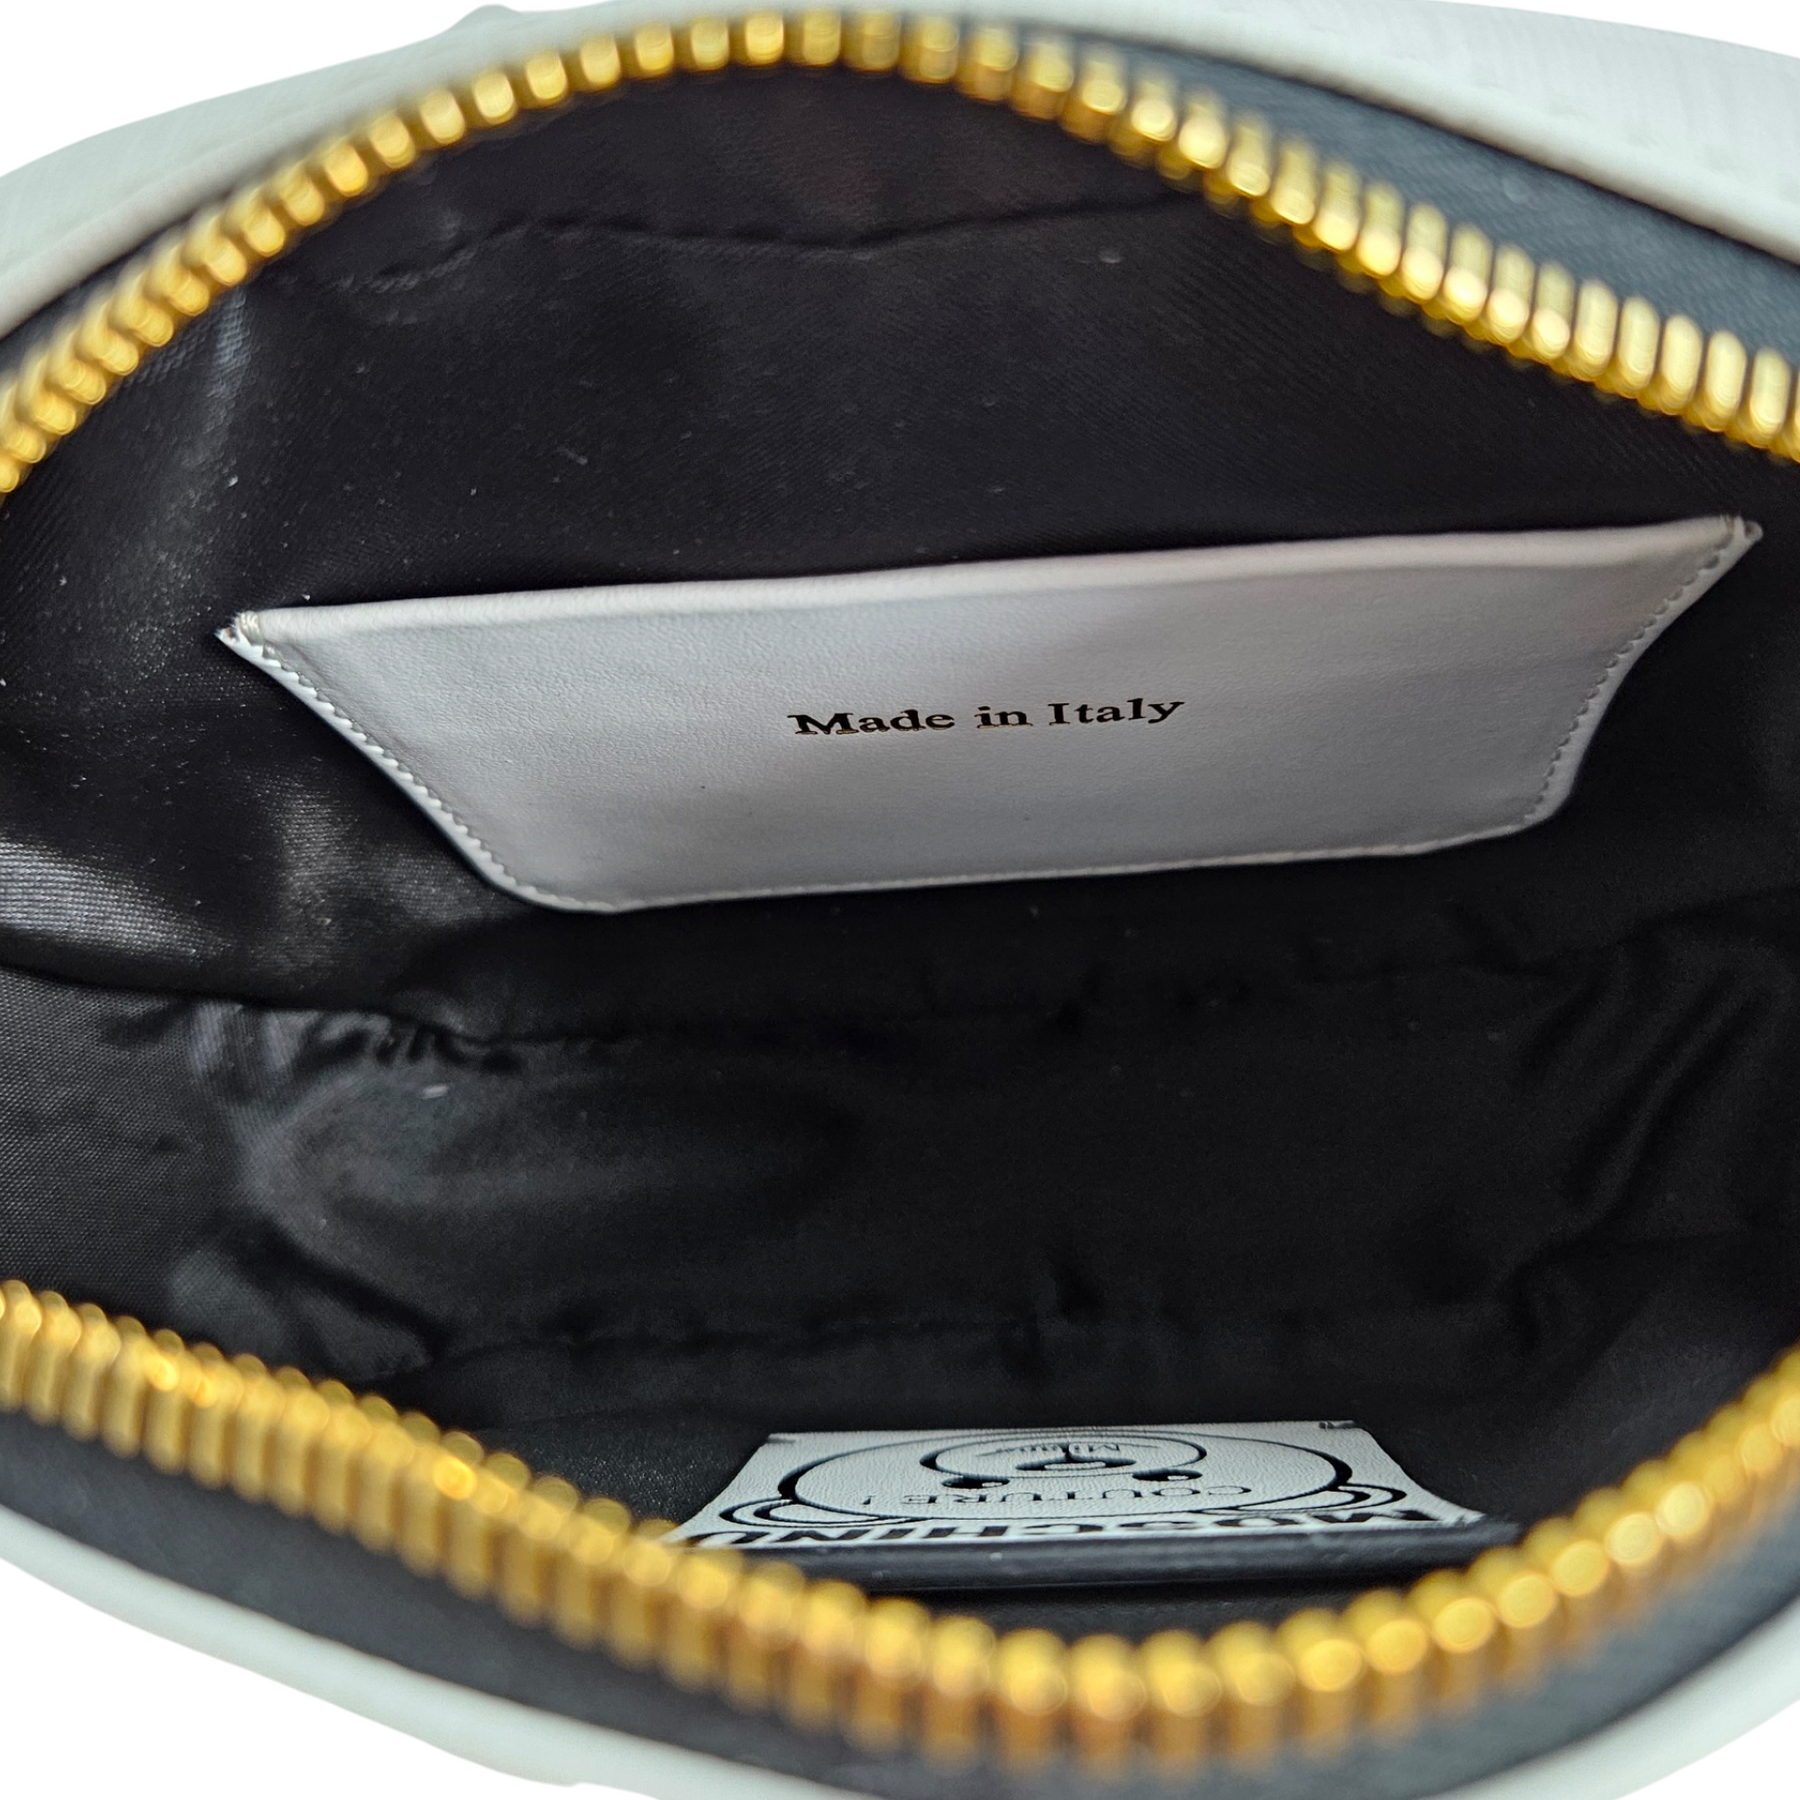 Moschino Teddy Bear Waist Bag Saffiano Leather